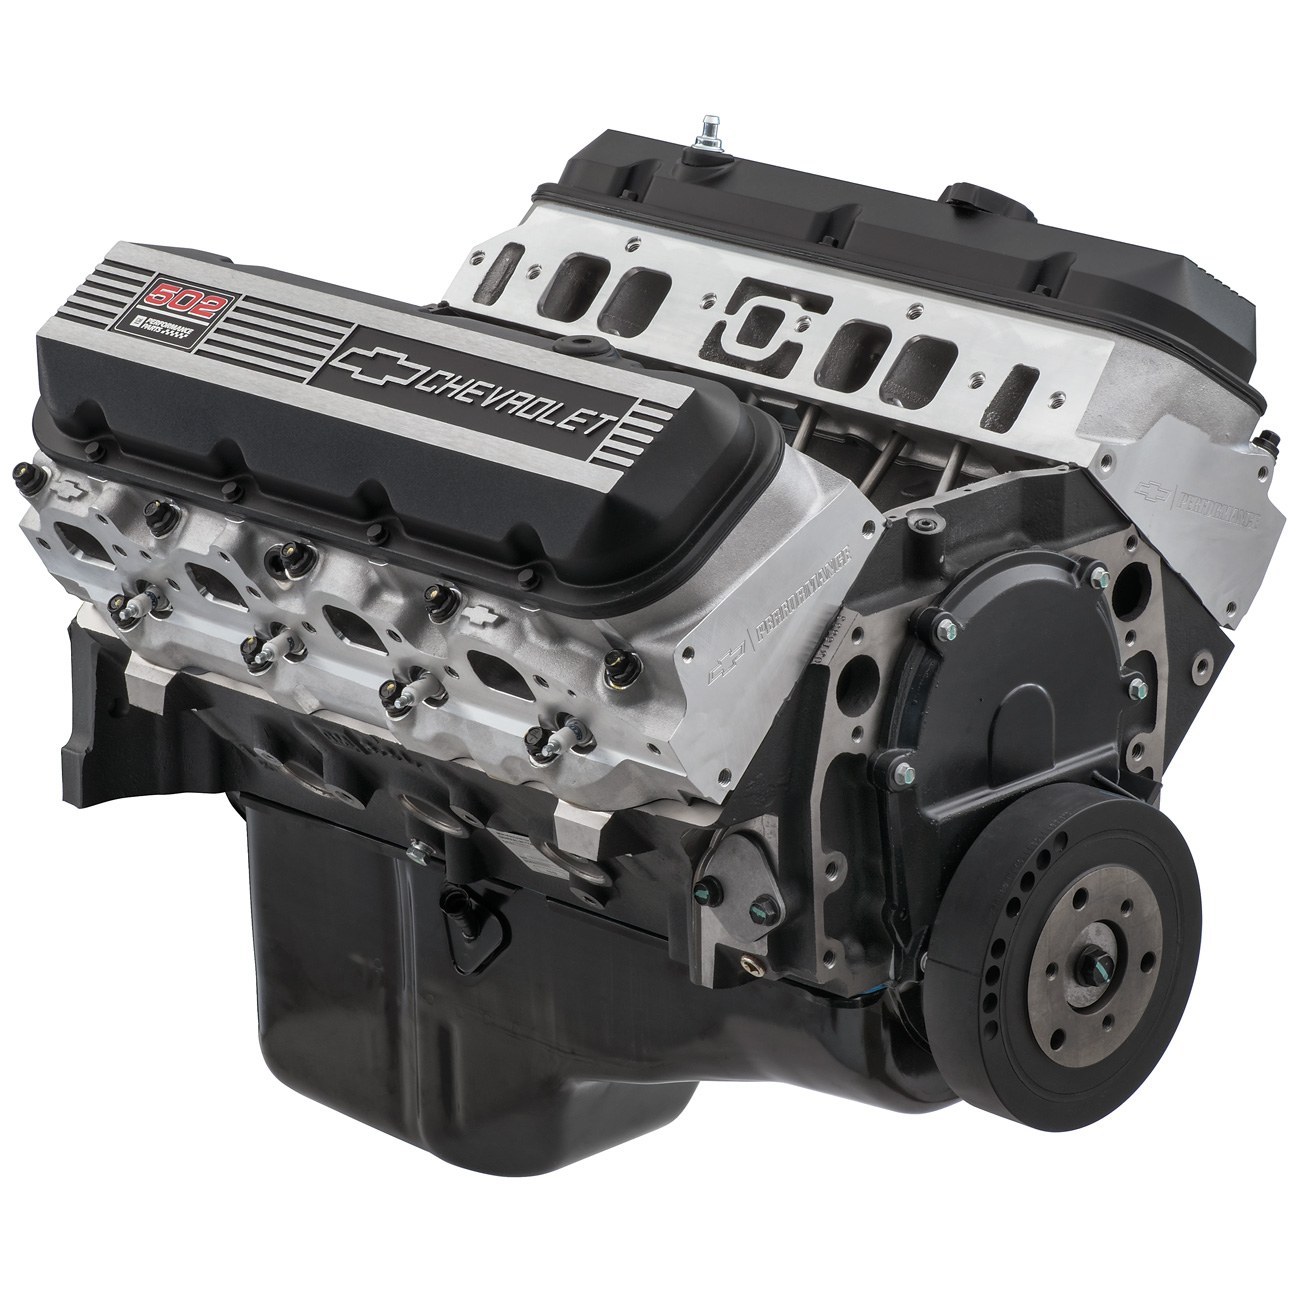 ZZ502 Base Engine, 508 HP @ 5200 RPM